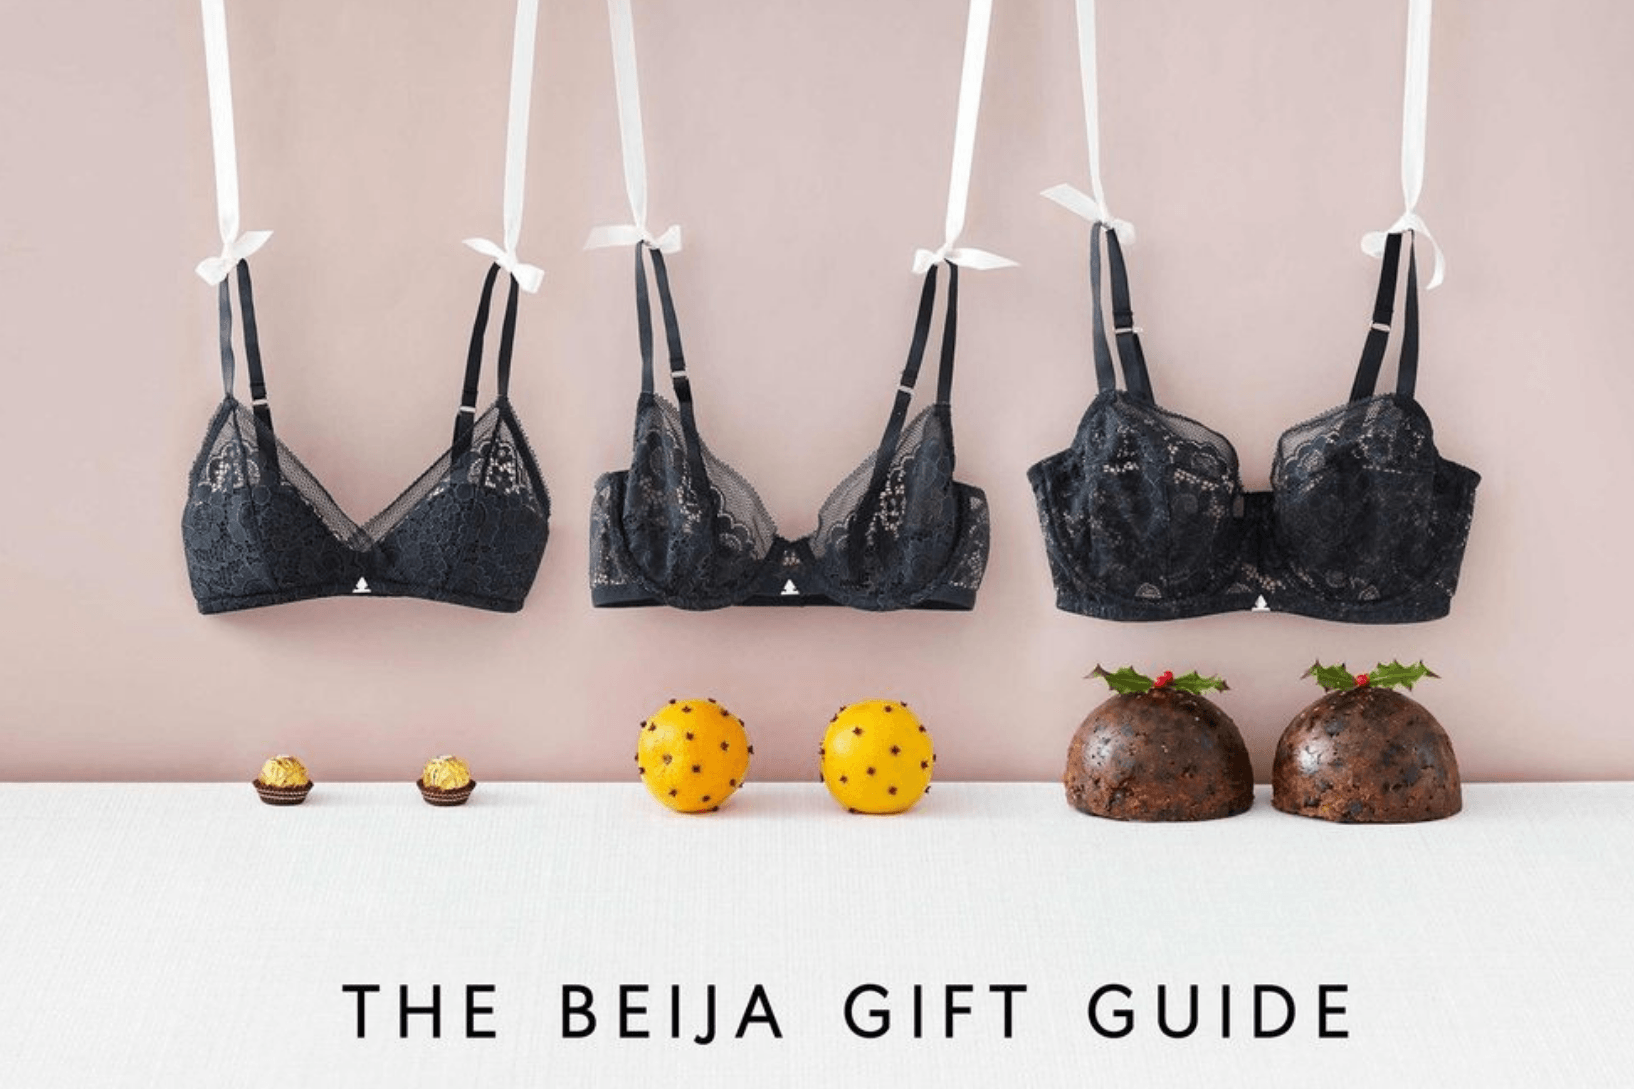 Beija London's Christmas Gift Guide